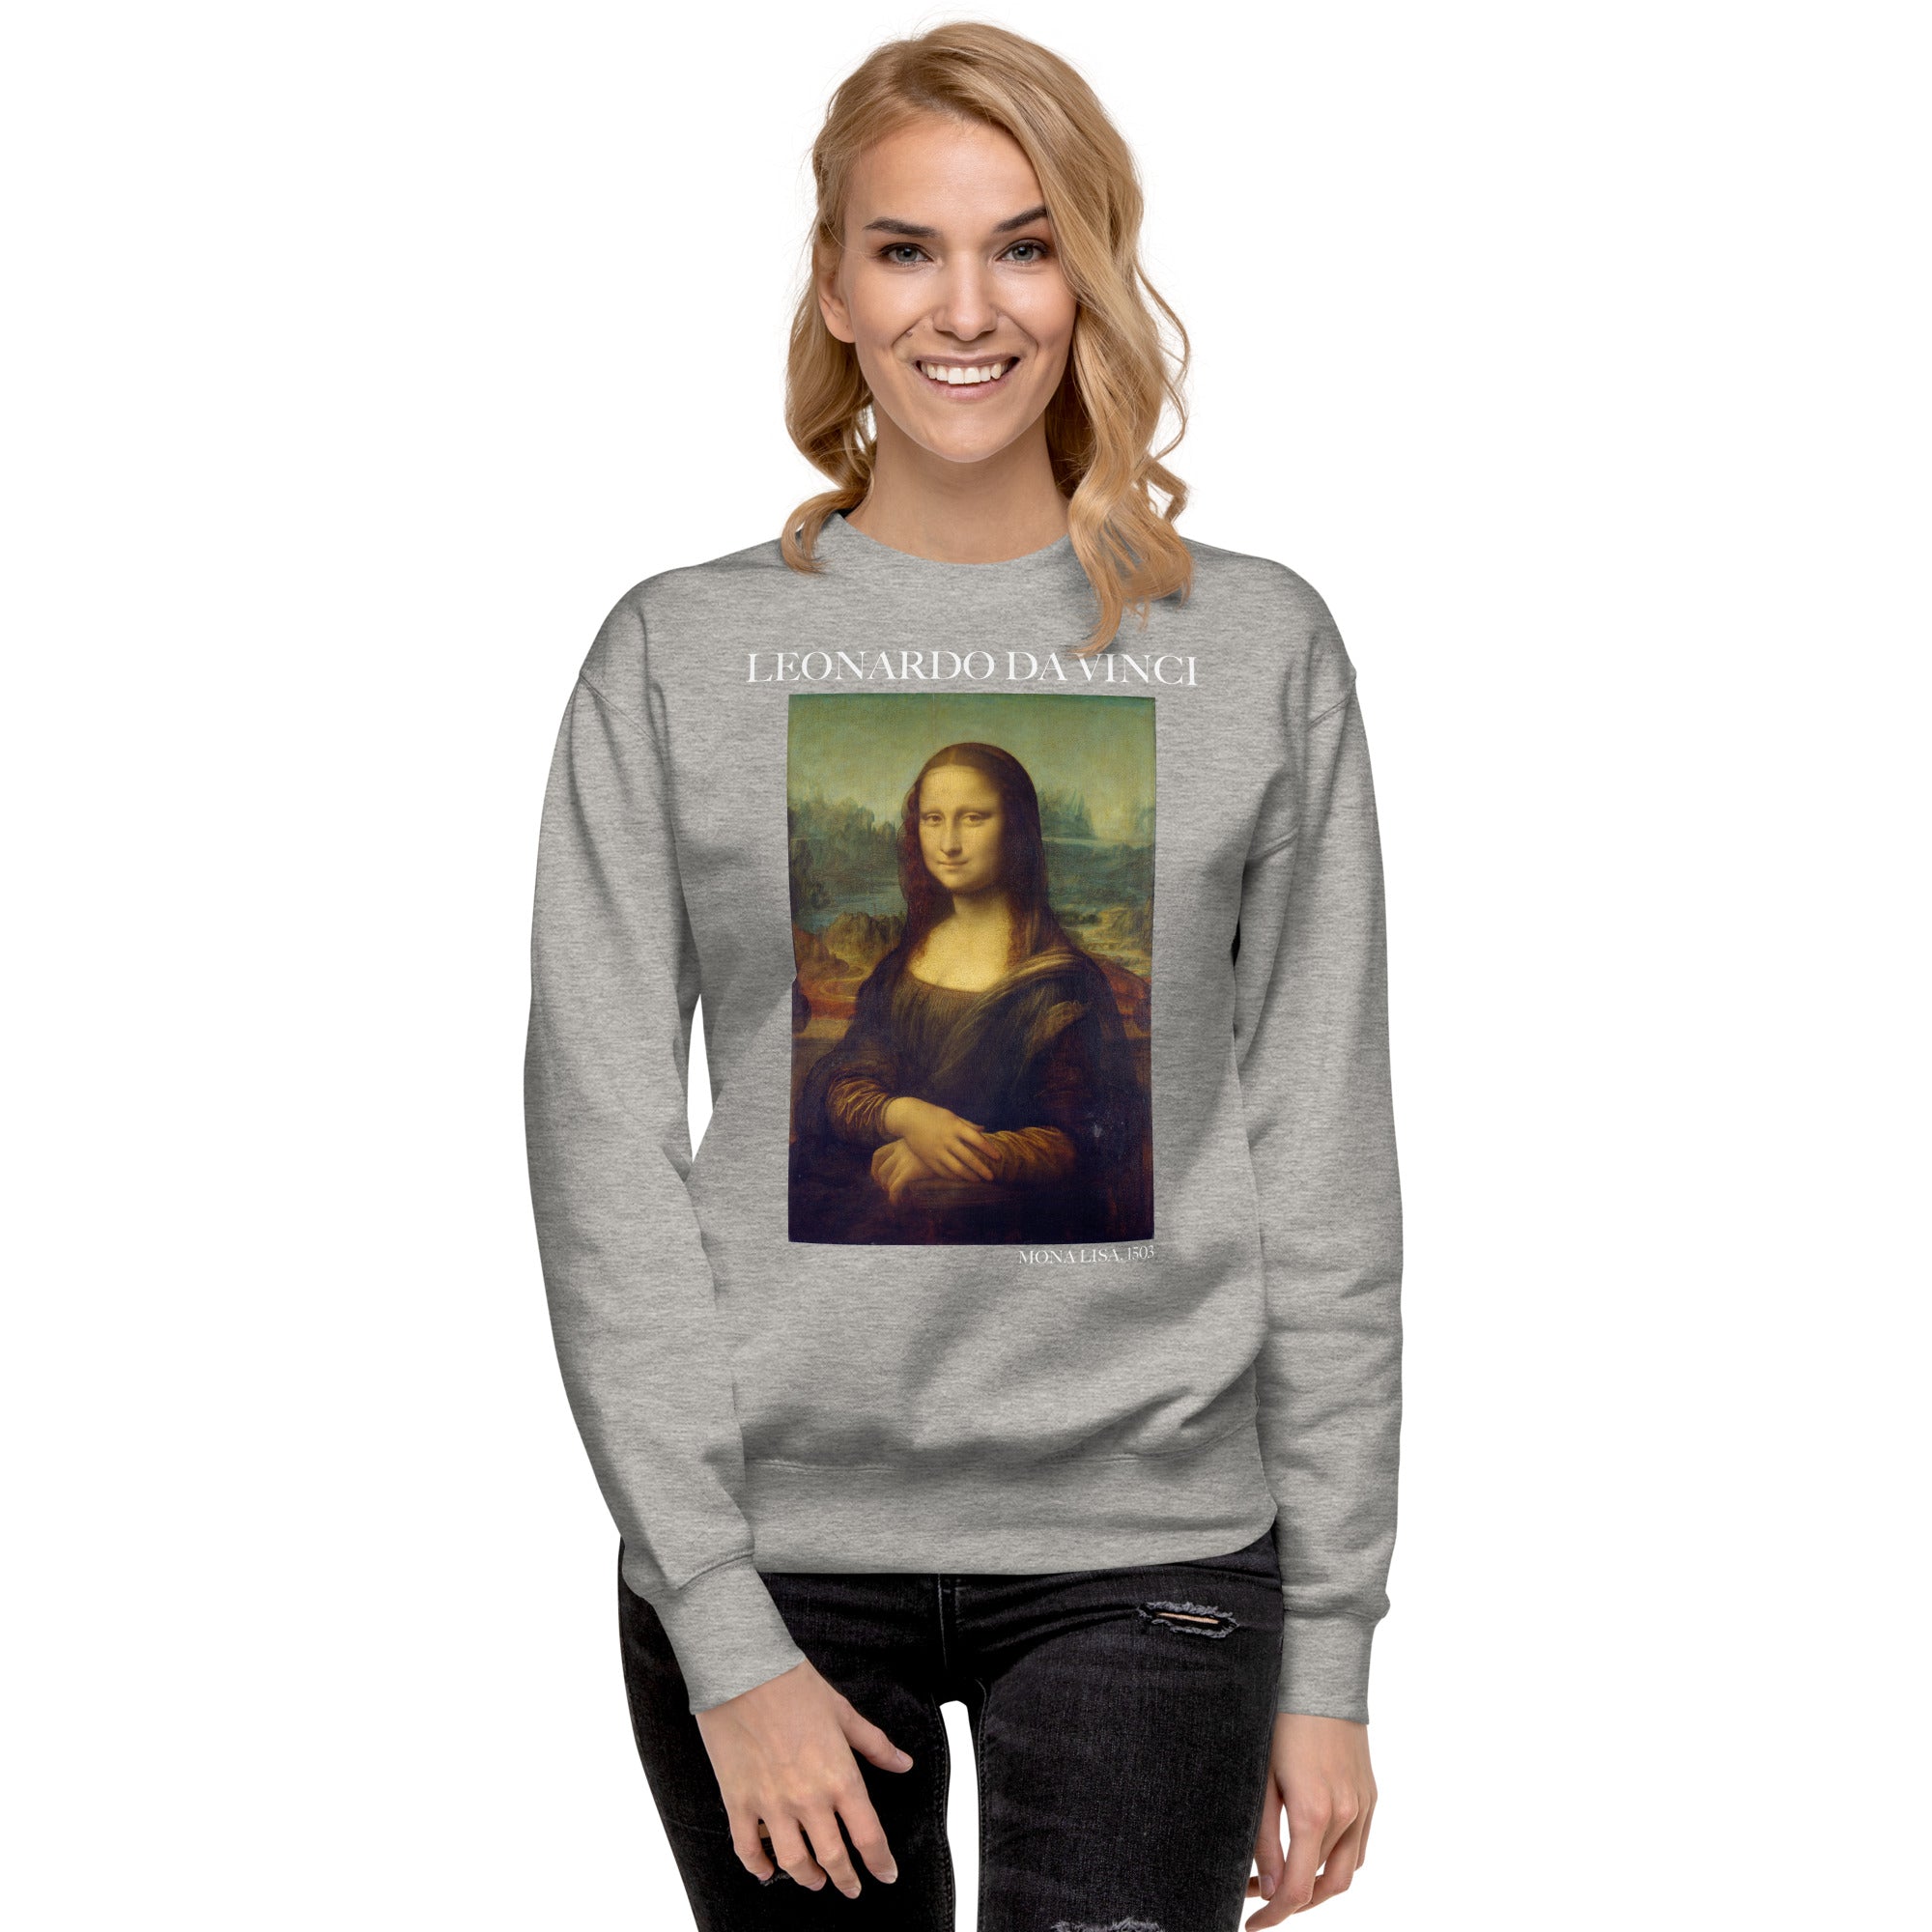 Leonardo da Vinci 'Mona Lisa' Famous Painting Sweatshirt | Unisex Premium Sweatshirt